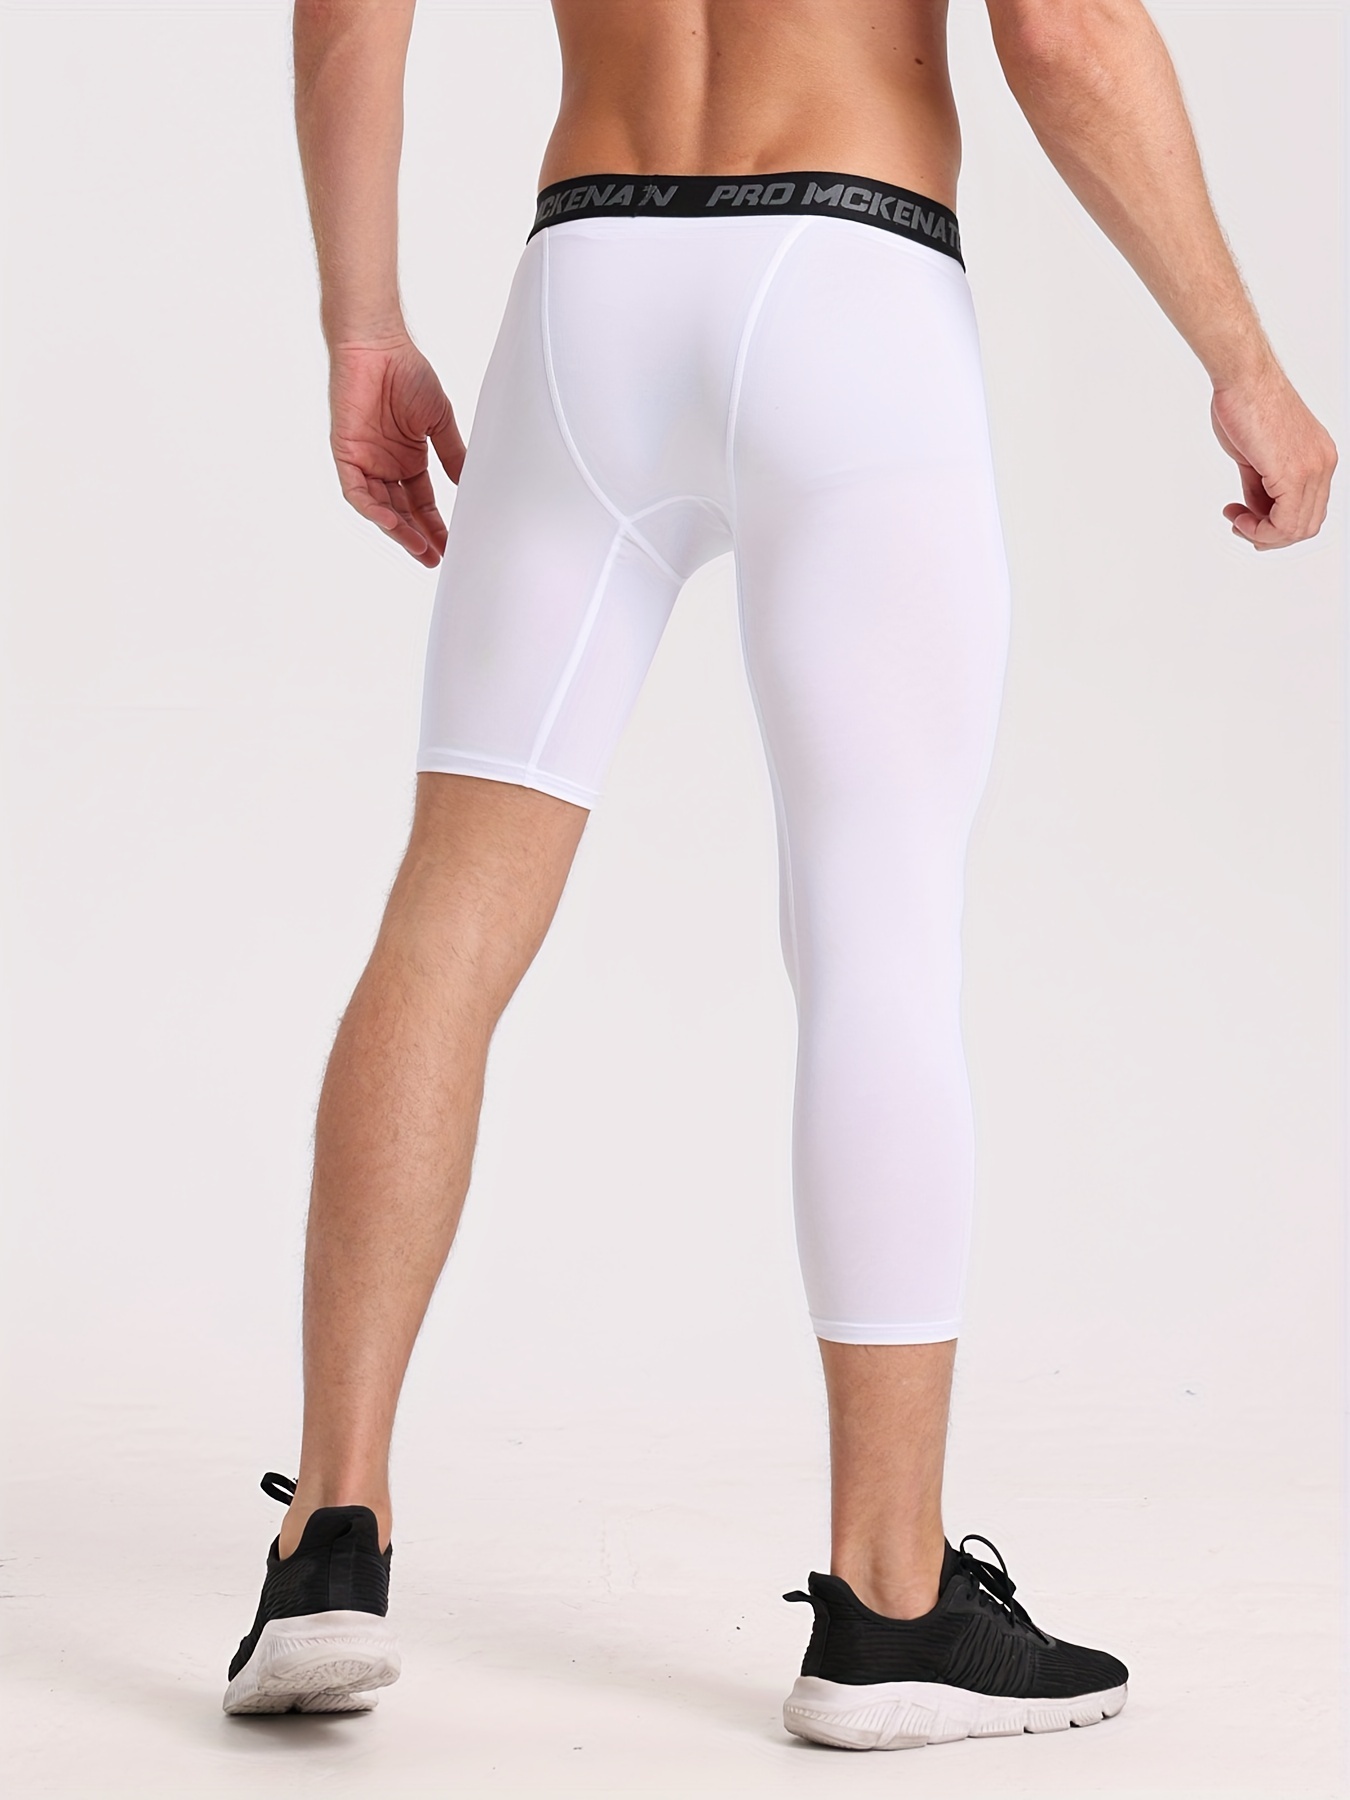 One Leg Compression Capri Tights Pants 2 Packs White Black 2 Colors Men's  3/ 4 Athletic Base Layer Underwear